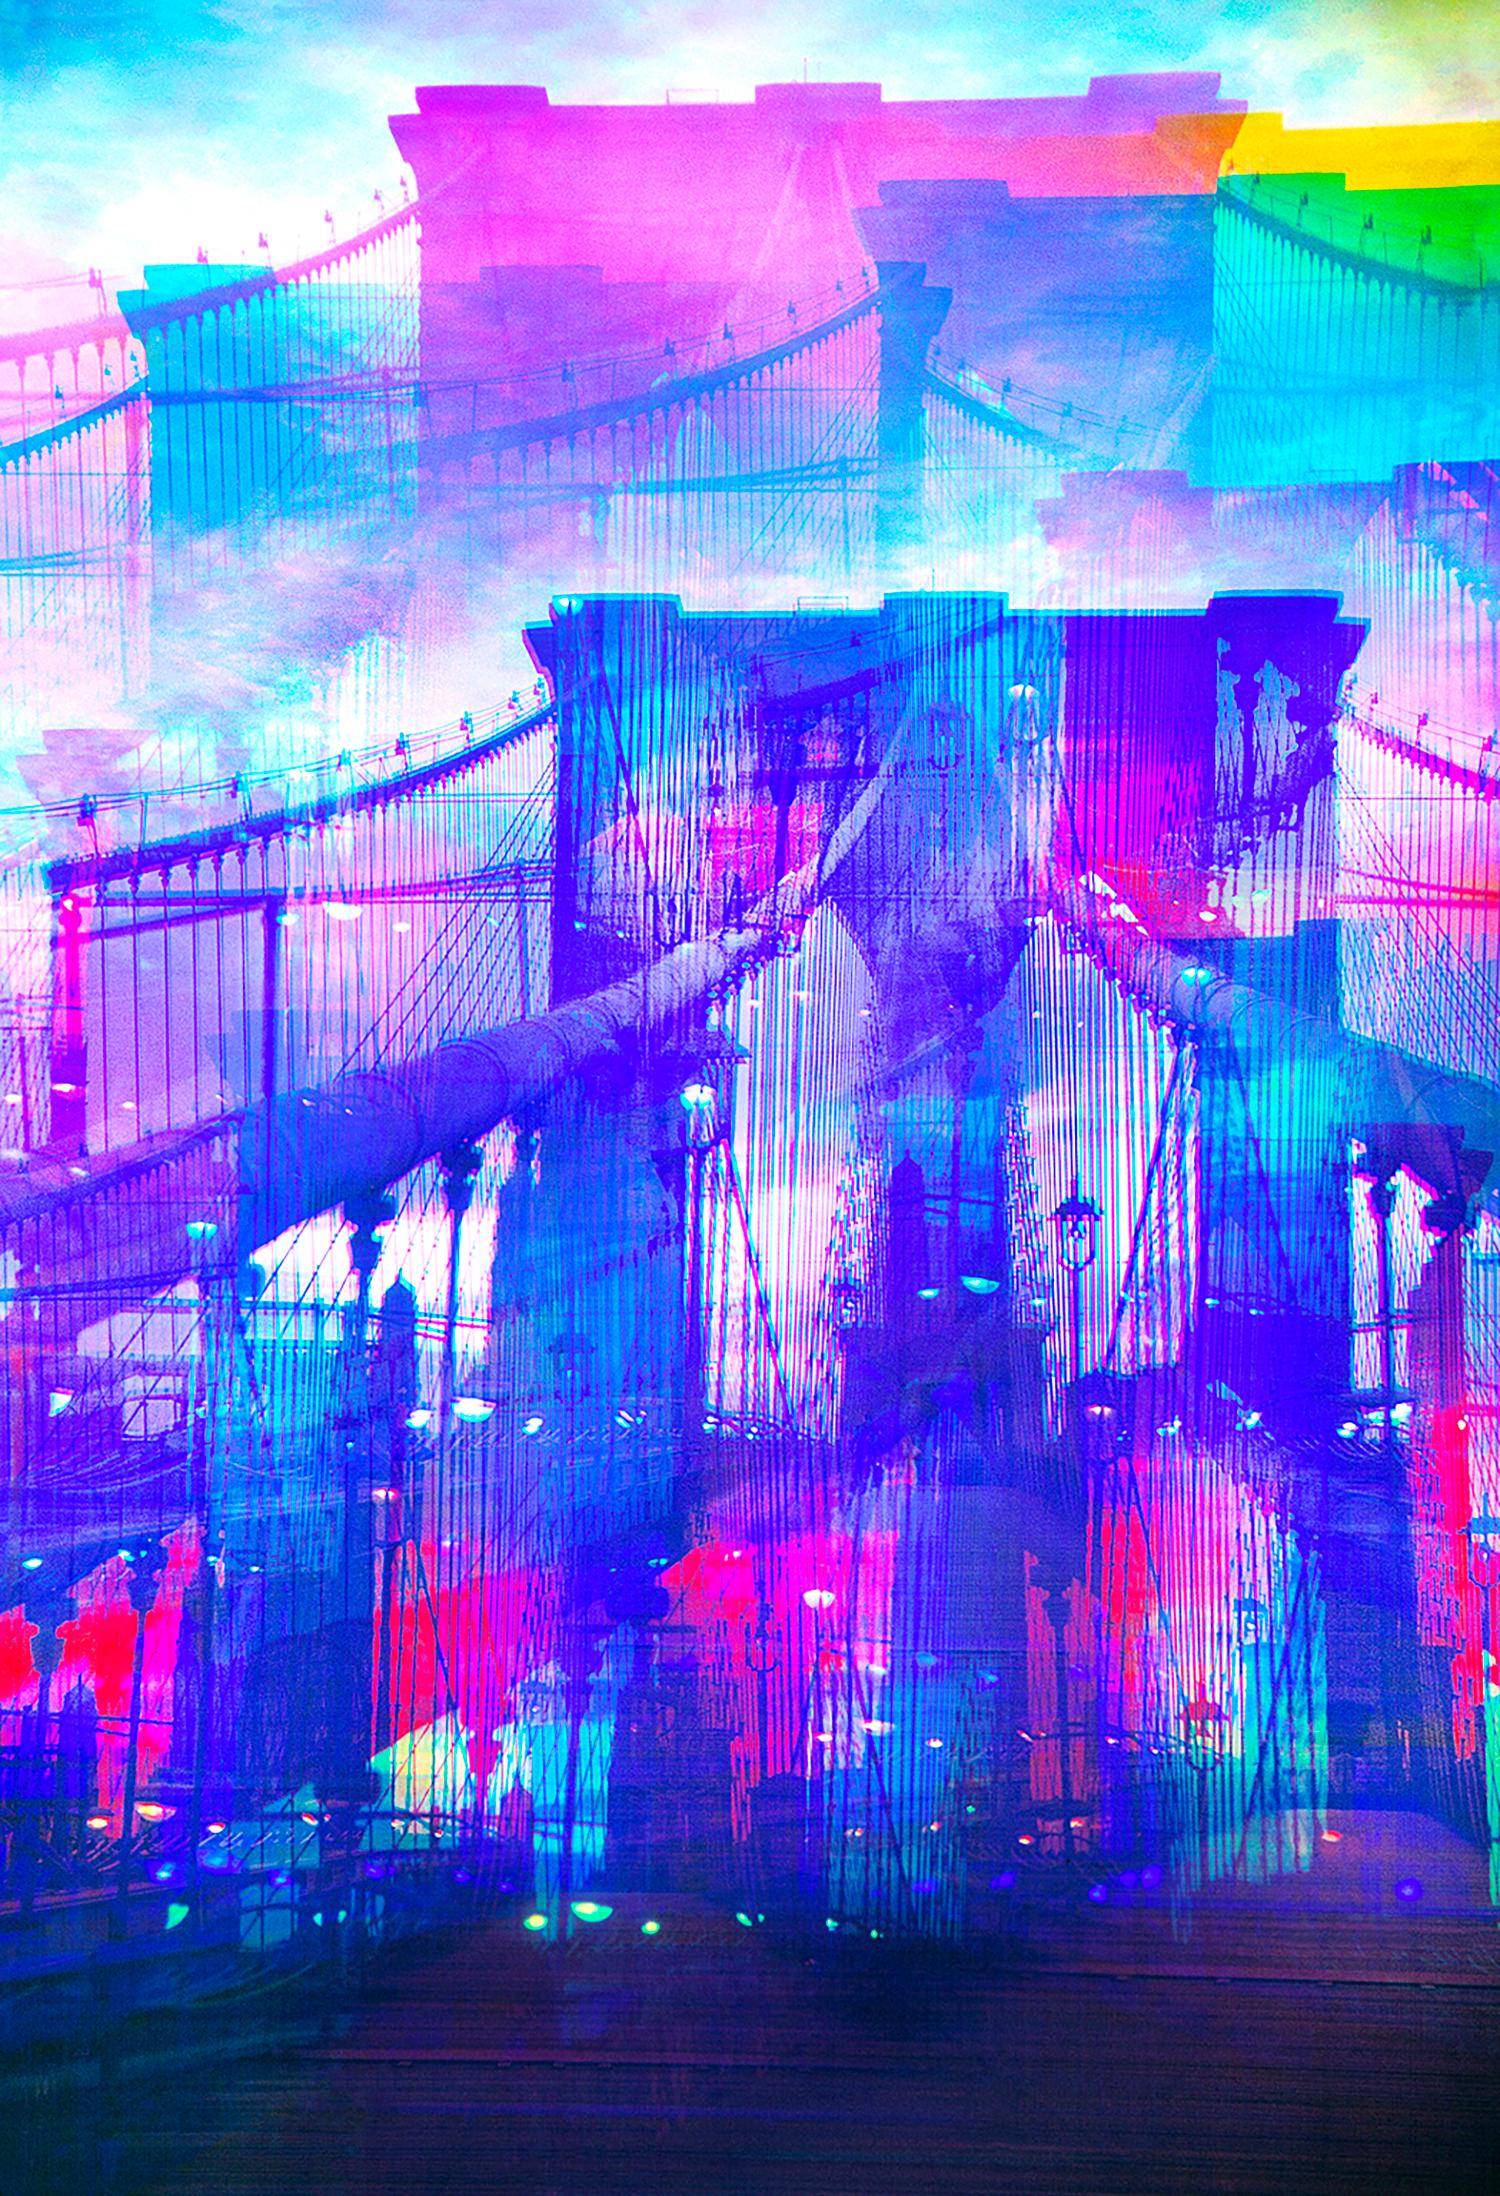 Landscape Photograph Mitchell Funk - Plusieurs expositions du pont de Brooklyn en magenta et bleu, City Abstract 